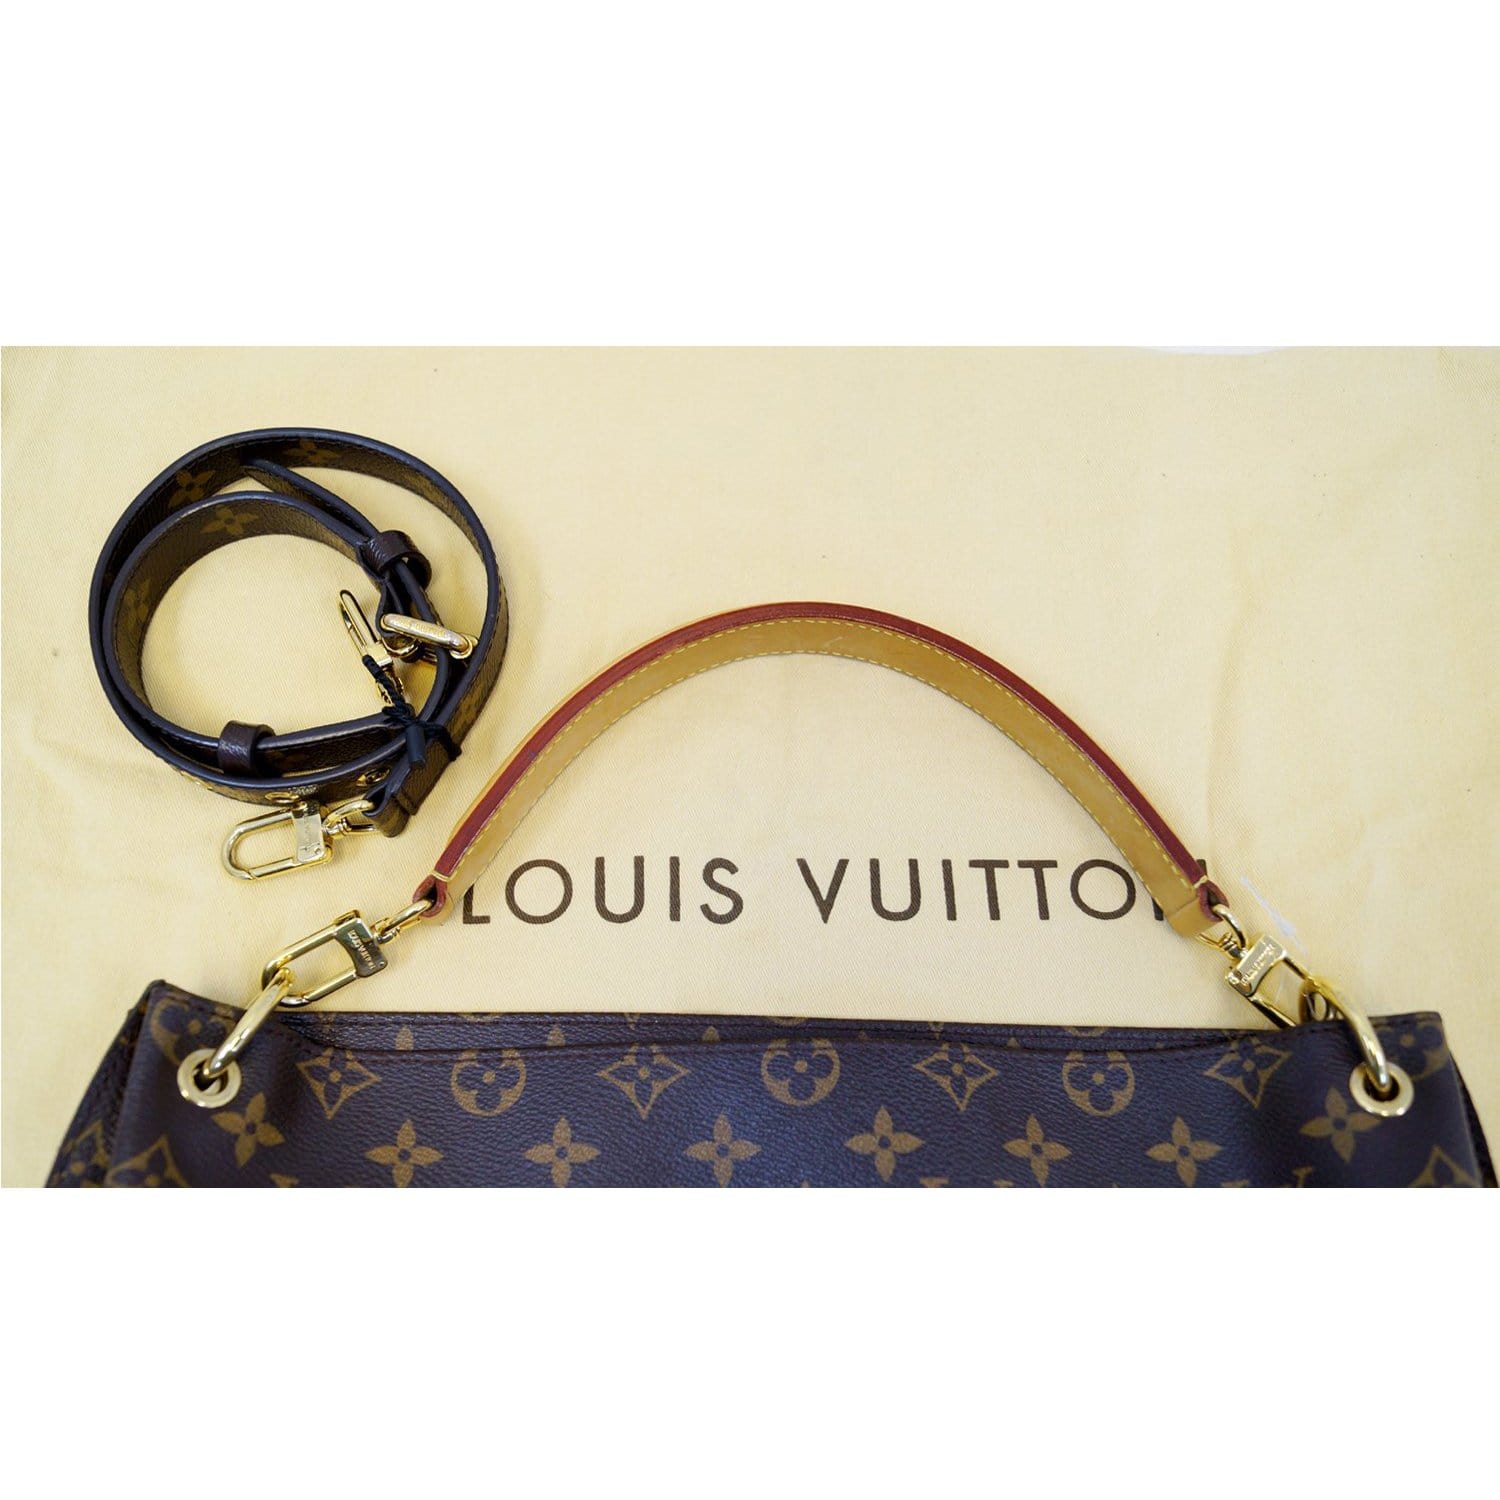 ❤️REVIEW - Louis Vuitton Metis Hobo 